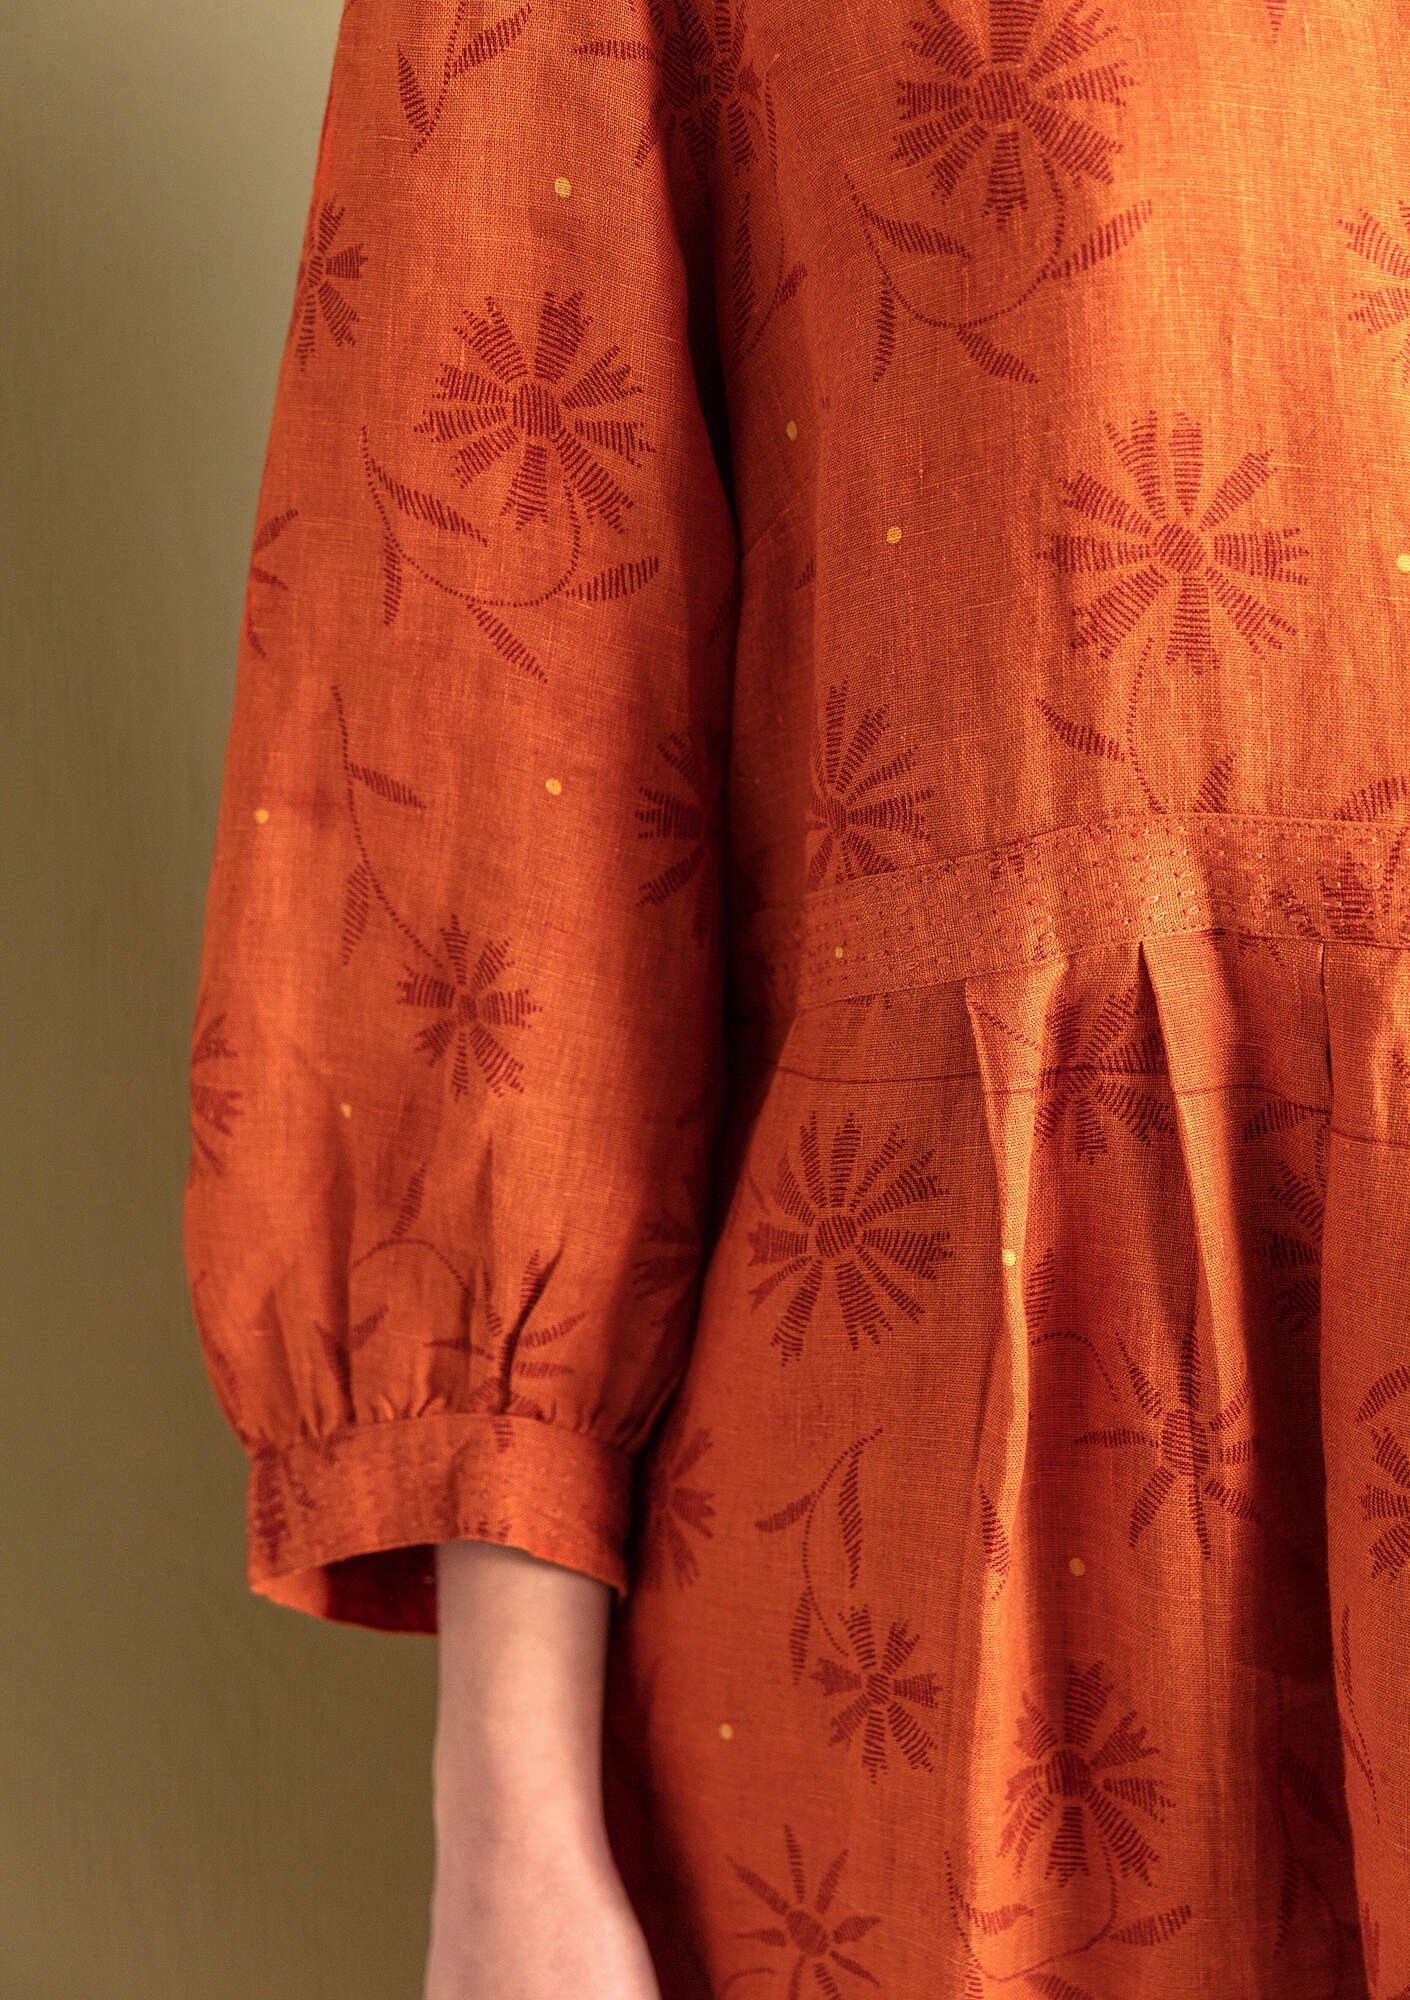 “Leia” woven linen dress henna/patterned thumbnail